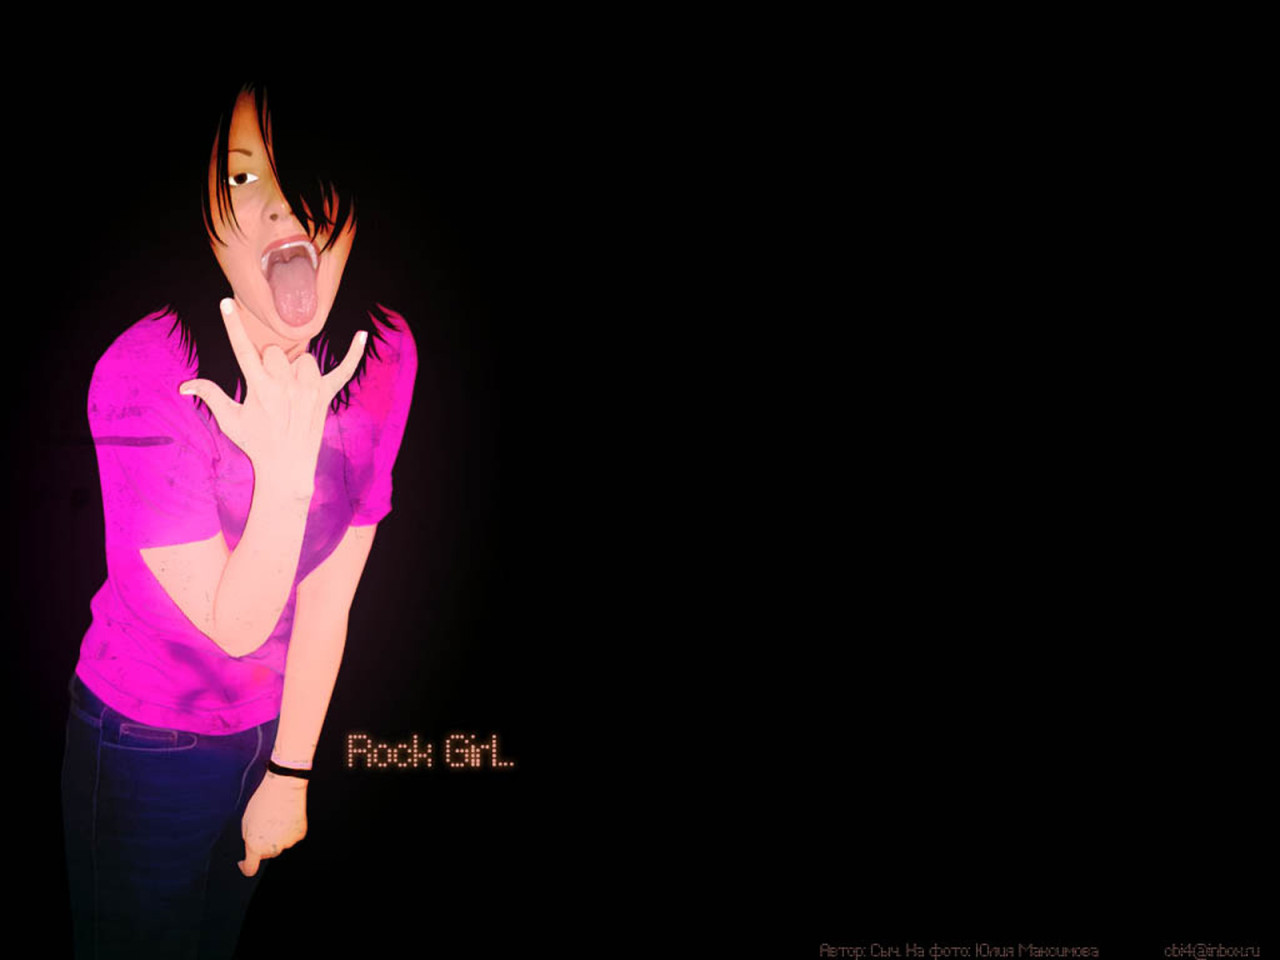 Emo Emo rock girl 011606 jpg